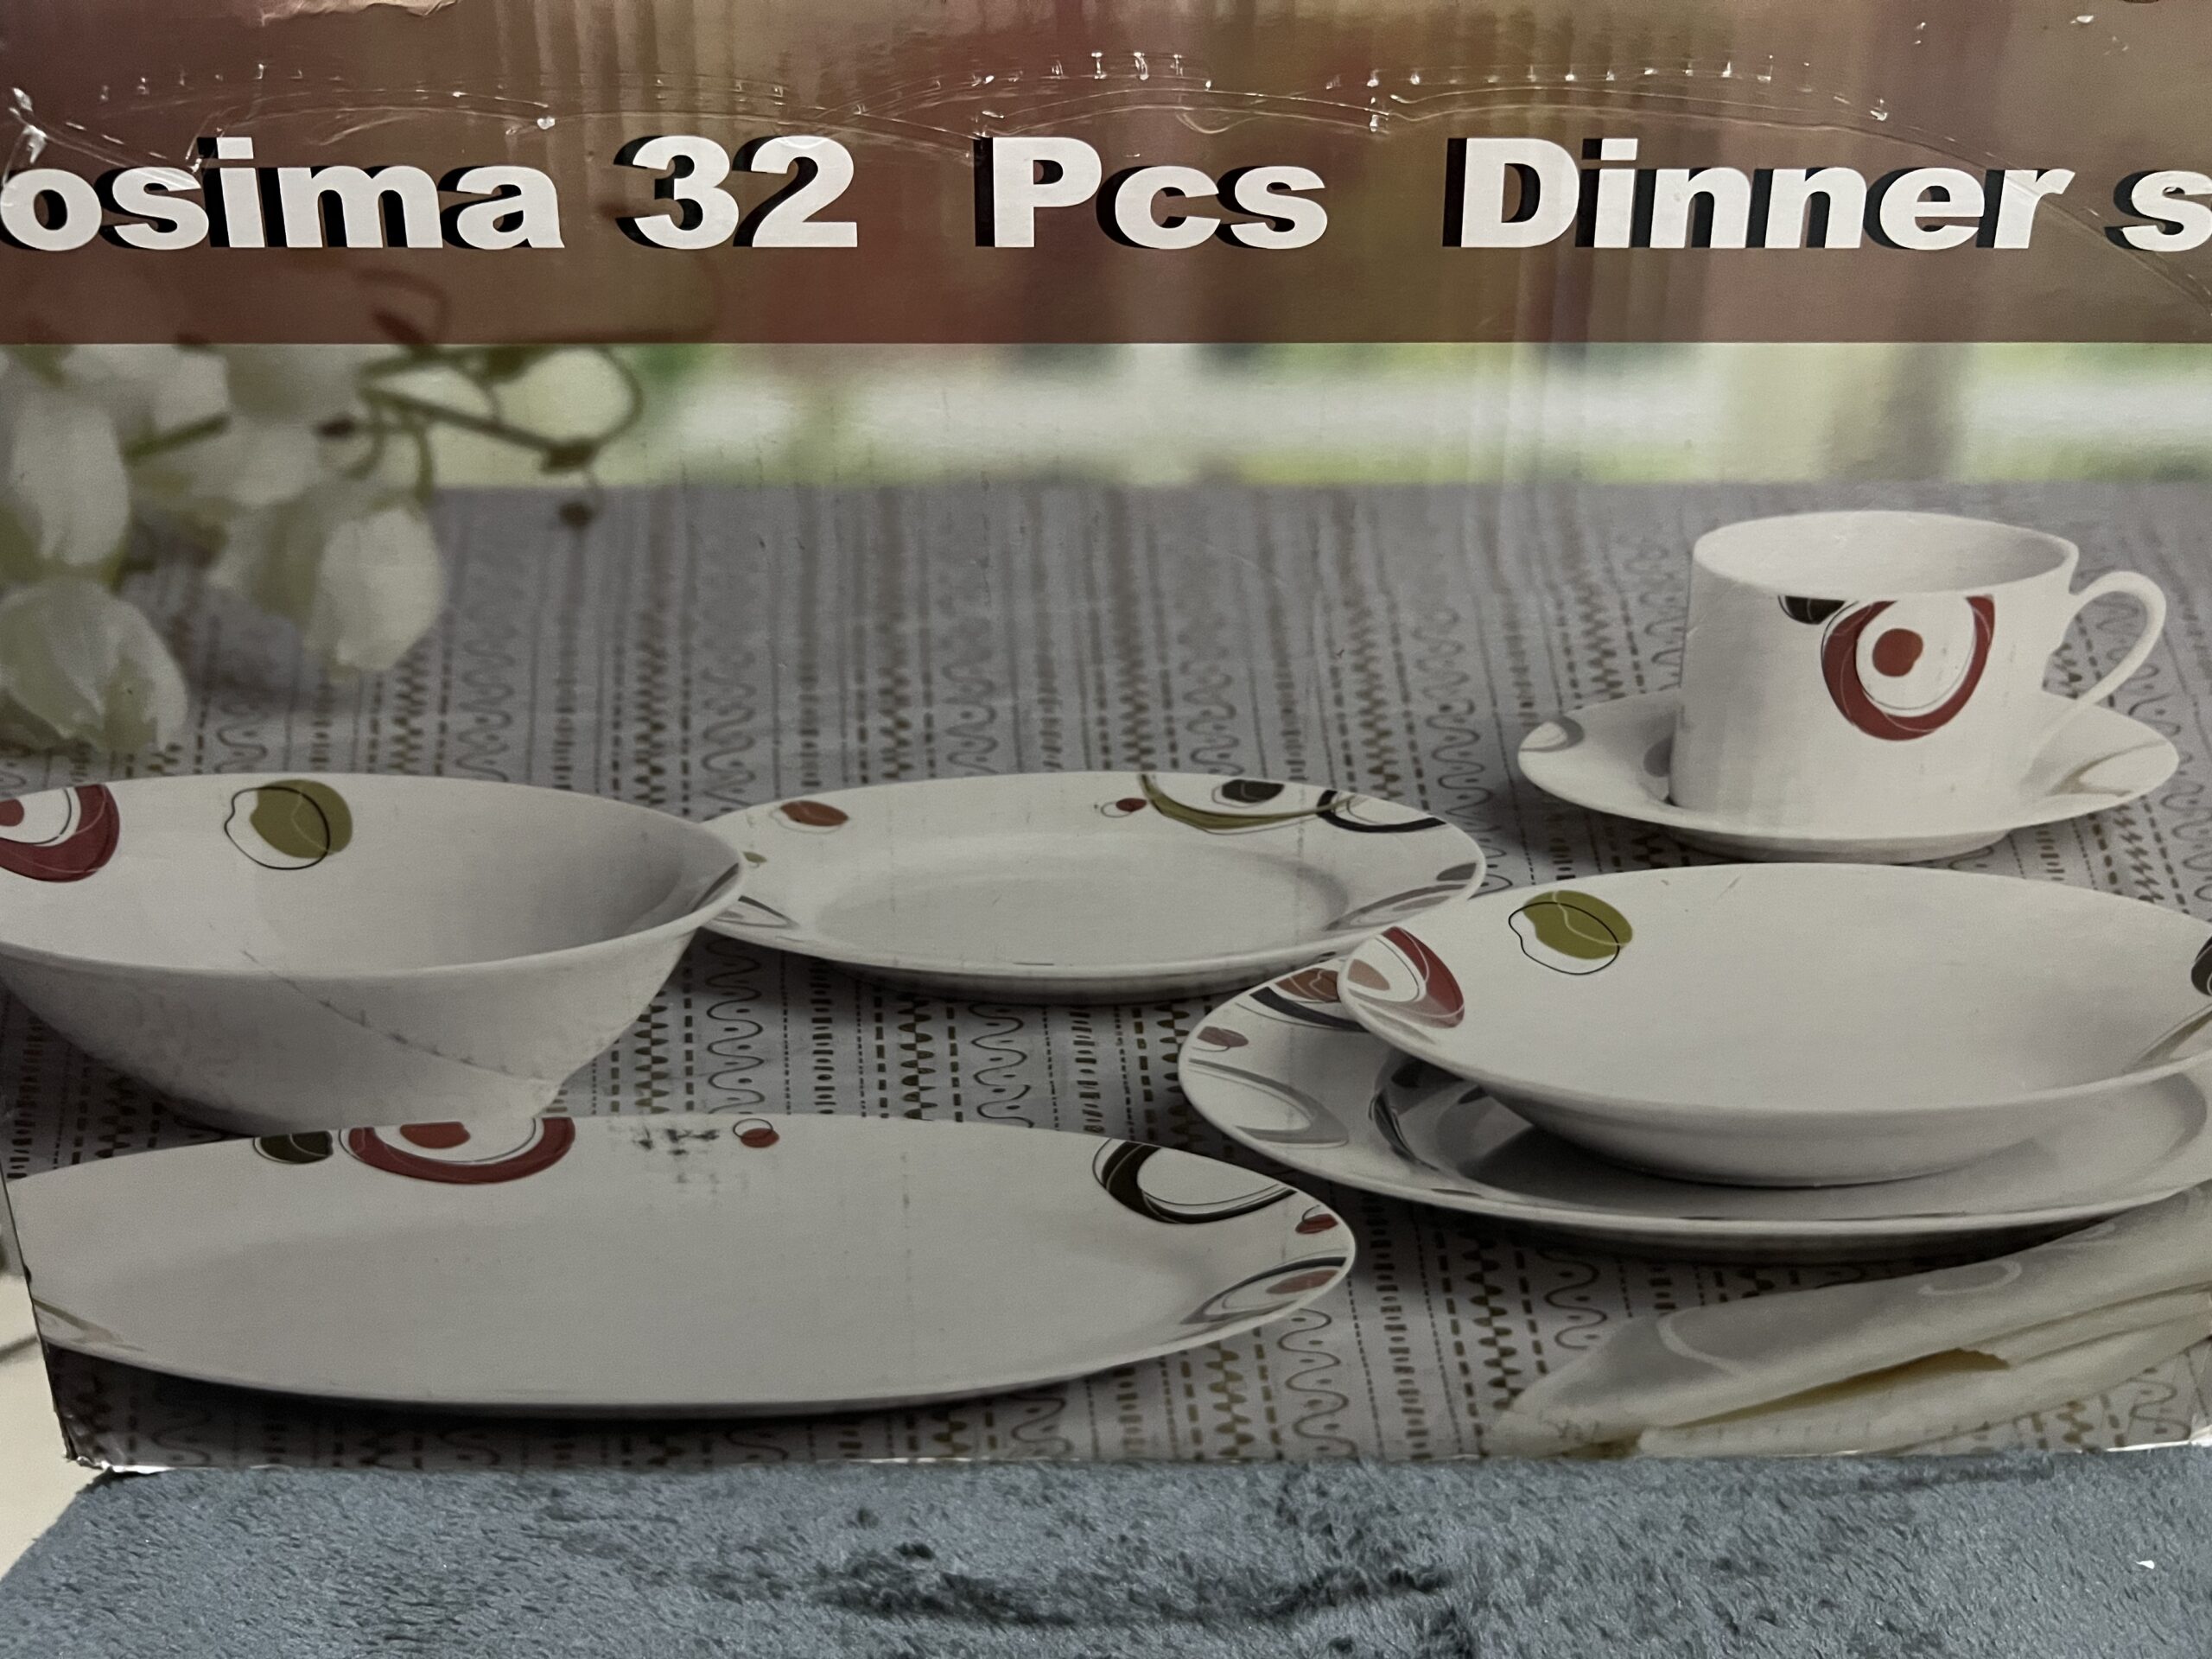 Cosima Dinner set 32 pcs